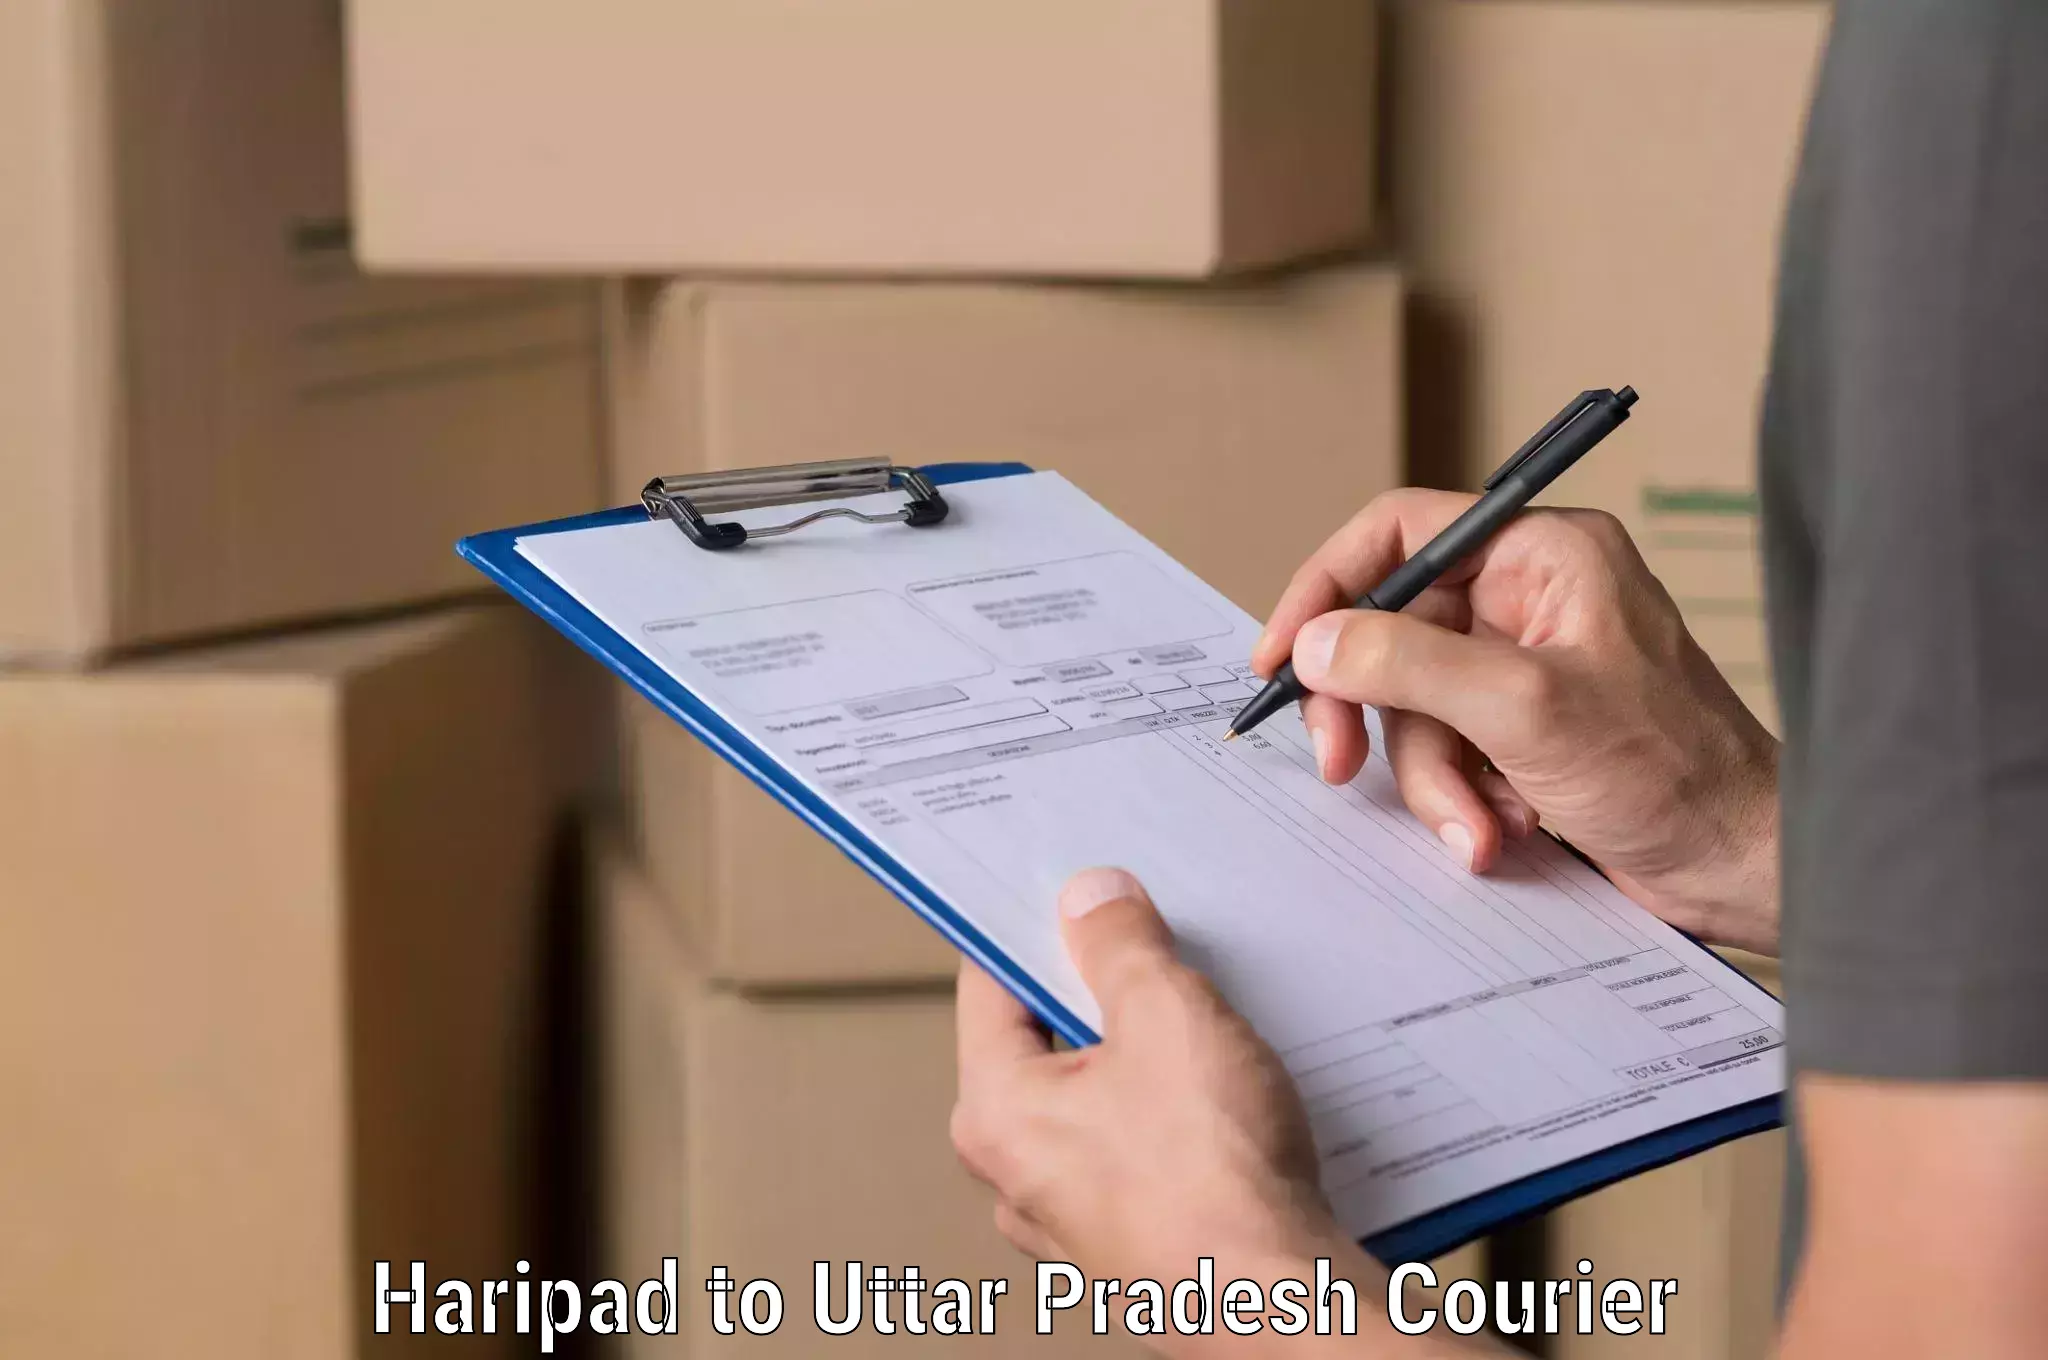 Bulk courier orders Haripad to Mathura